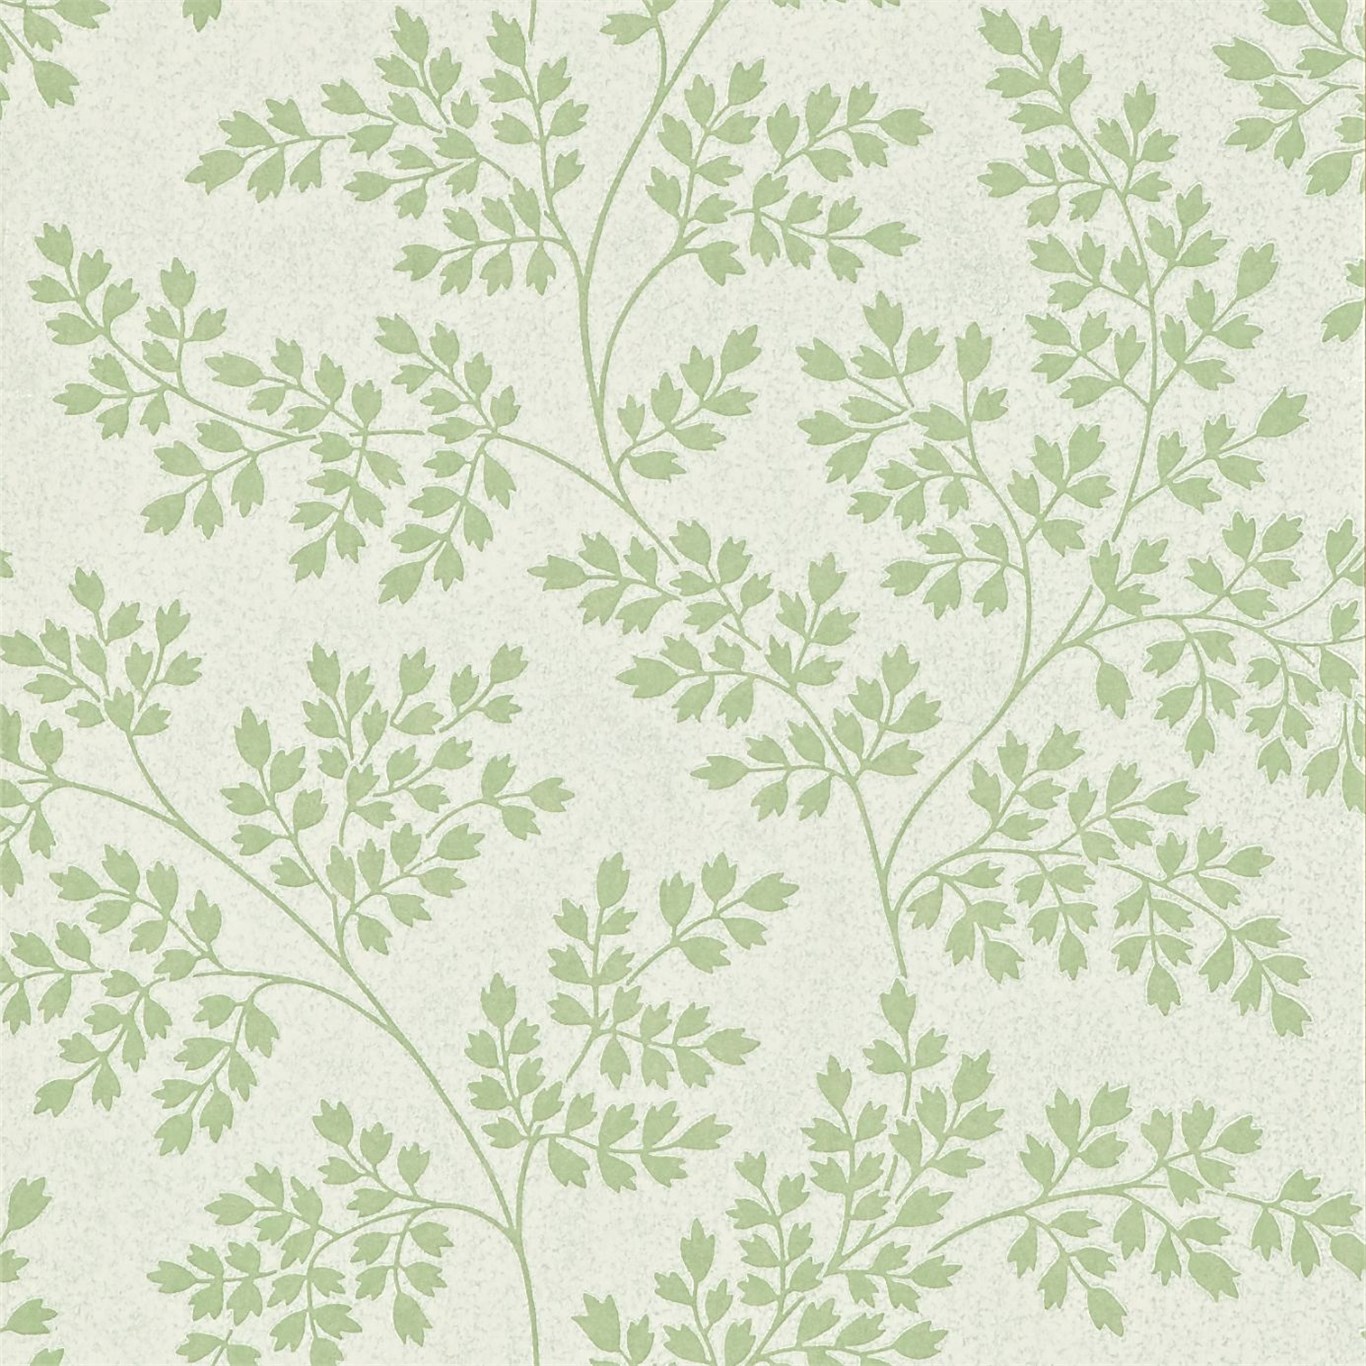 Wallpaper - Sanderson Caverley Wallpapers Coralie Leaf Green/Ivory